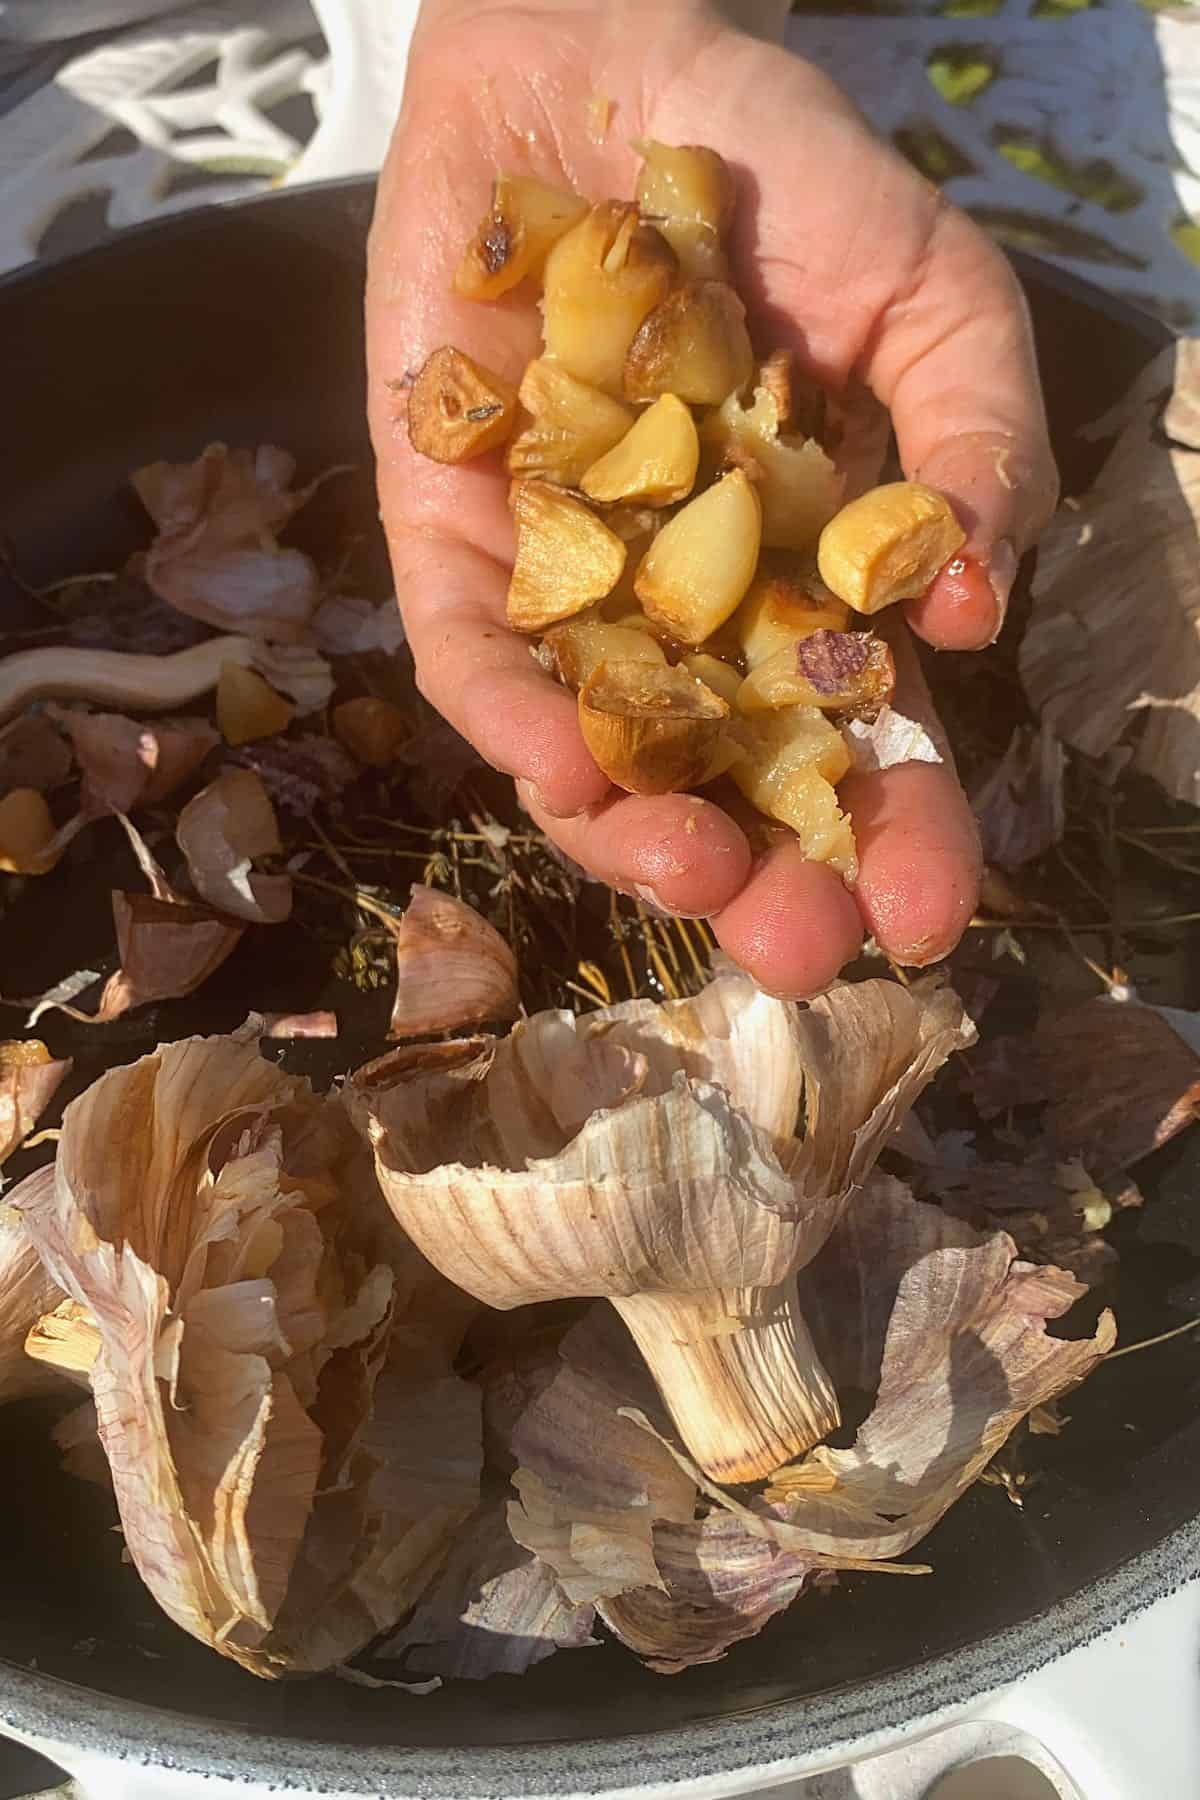 Roasted garlic in a hand